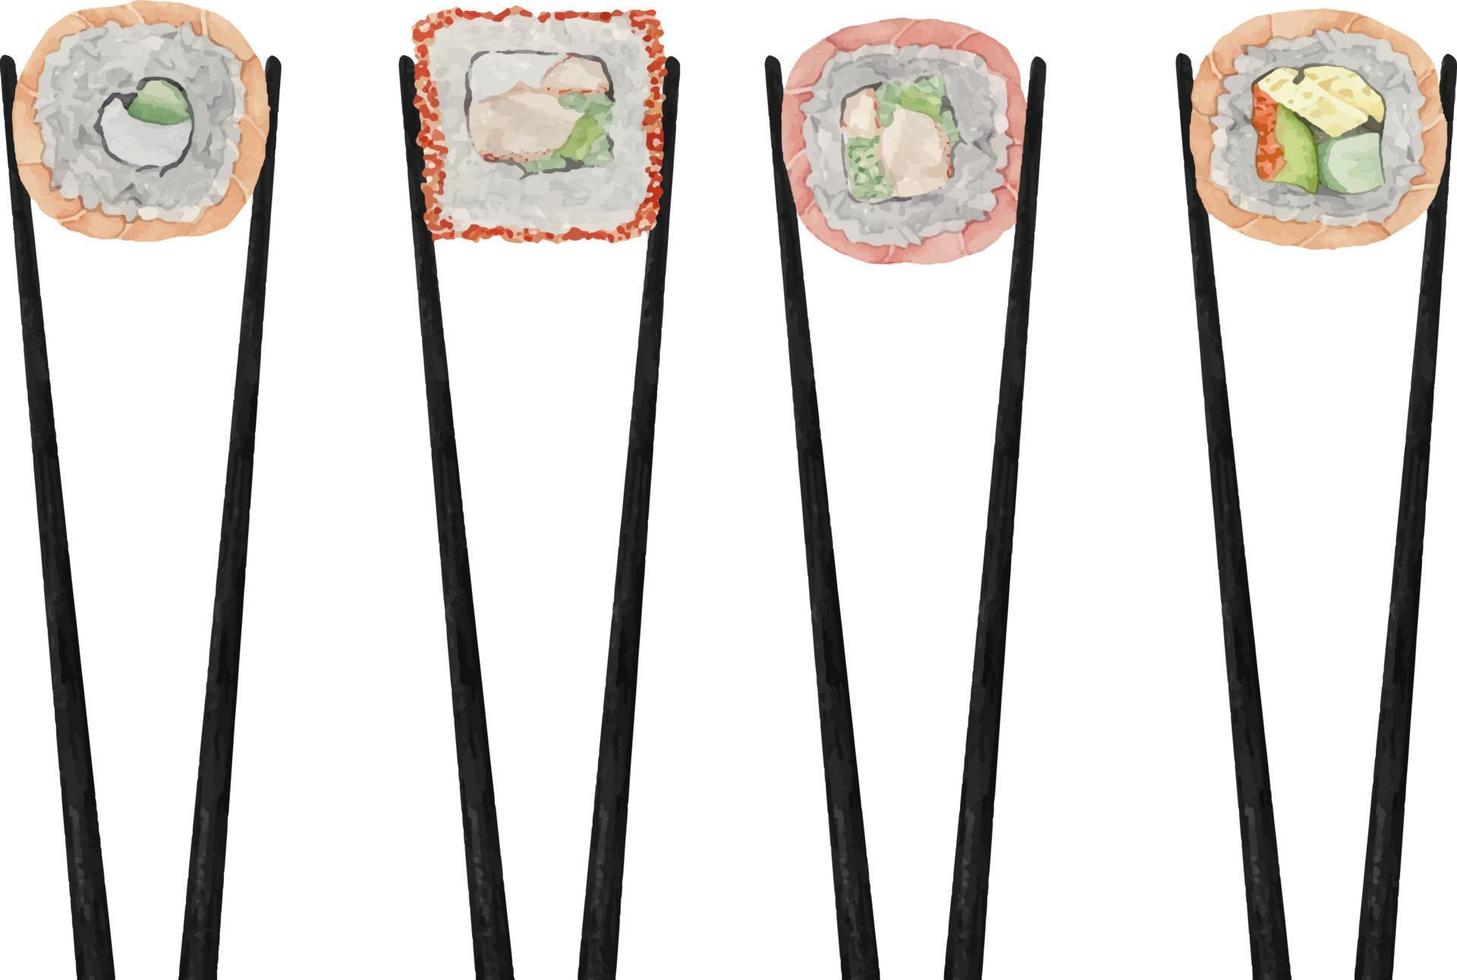 aquarell maki sushi und roll mit lachs, gurke und tamago vektor